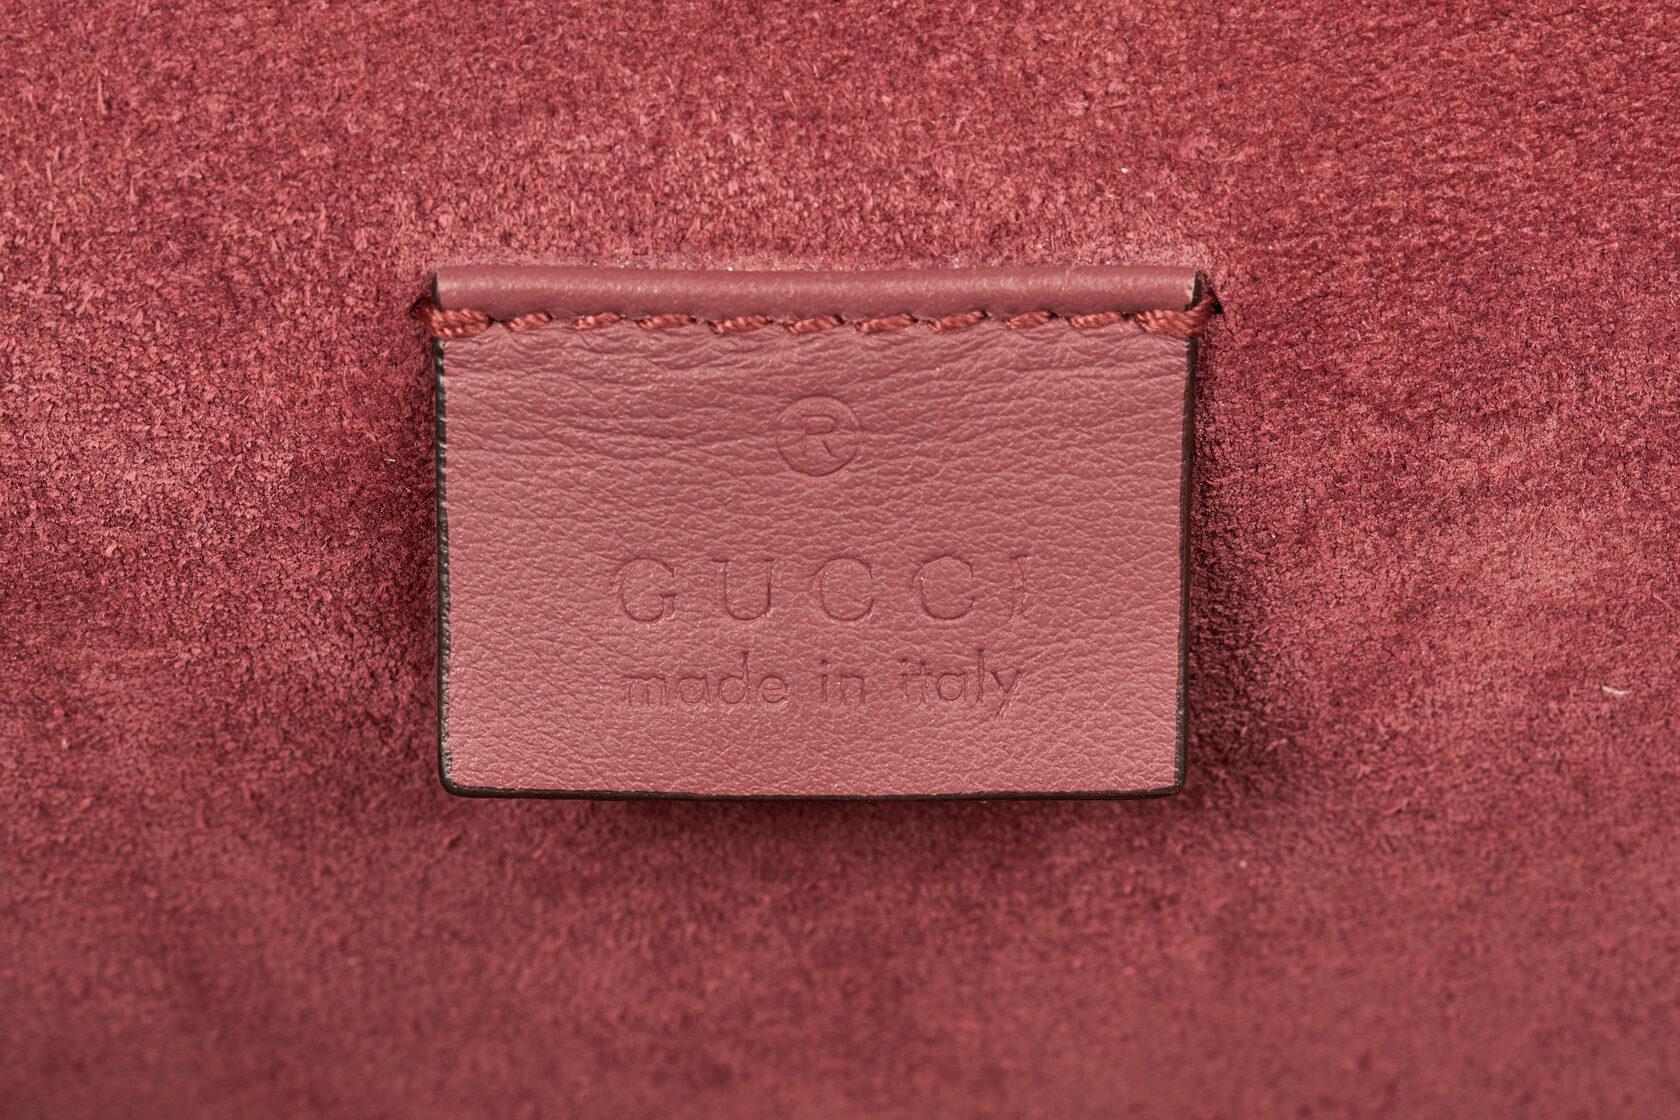 Gucci Dionysus GG Flora Blooms Small shoulder bag For Sale 5